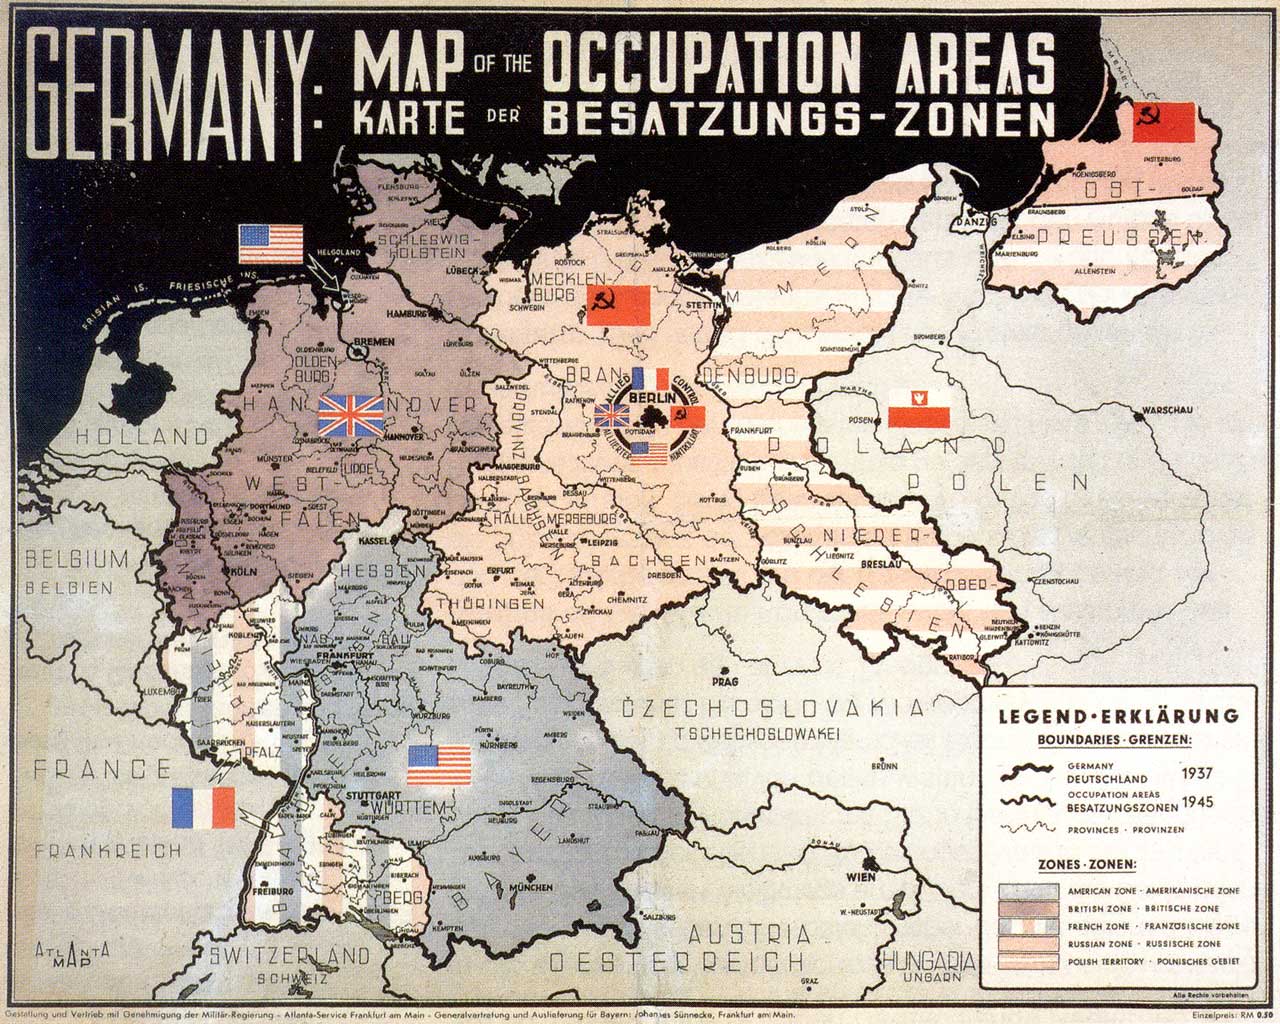 Postwar German occupation zones 1945